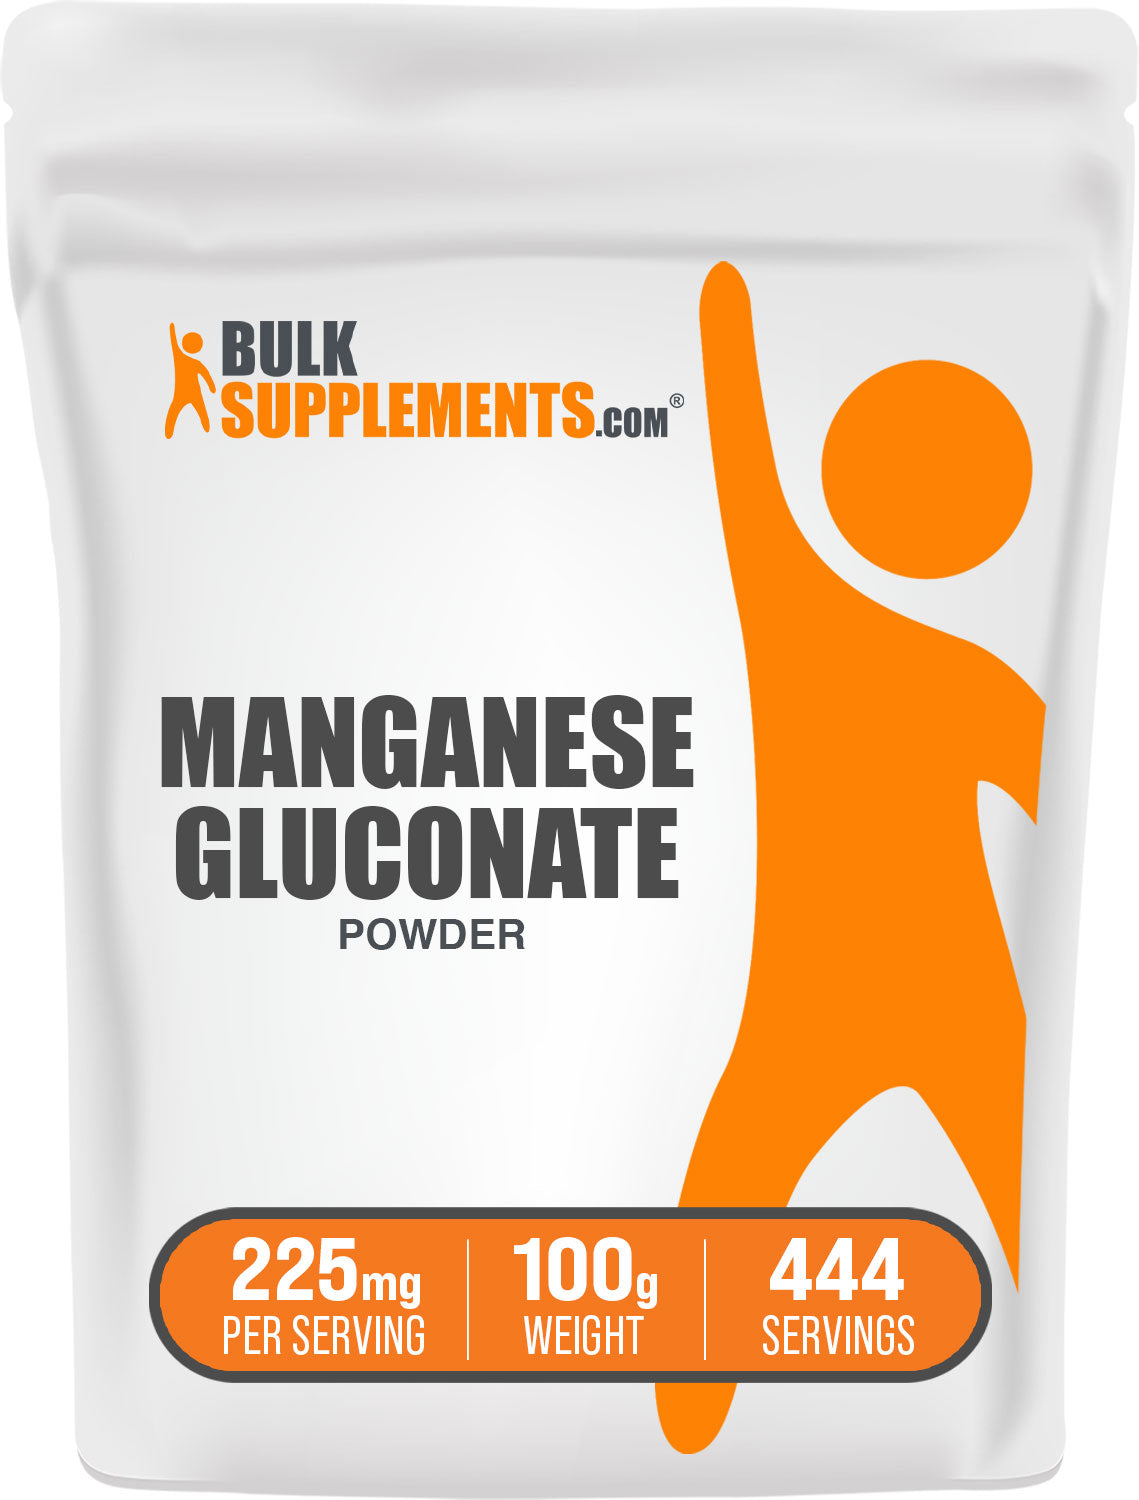 Manganese Gluconate 100g Bag